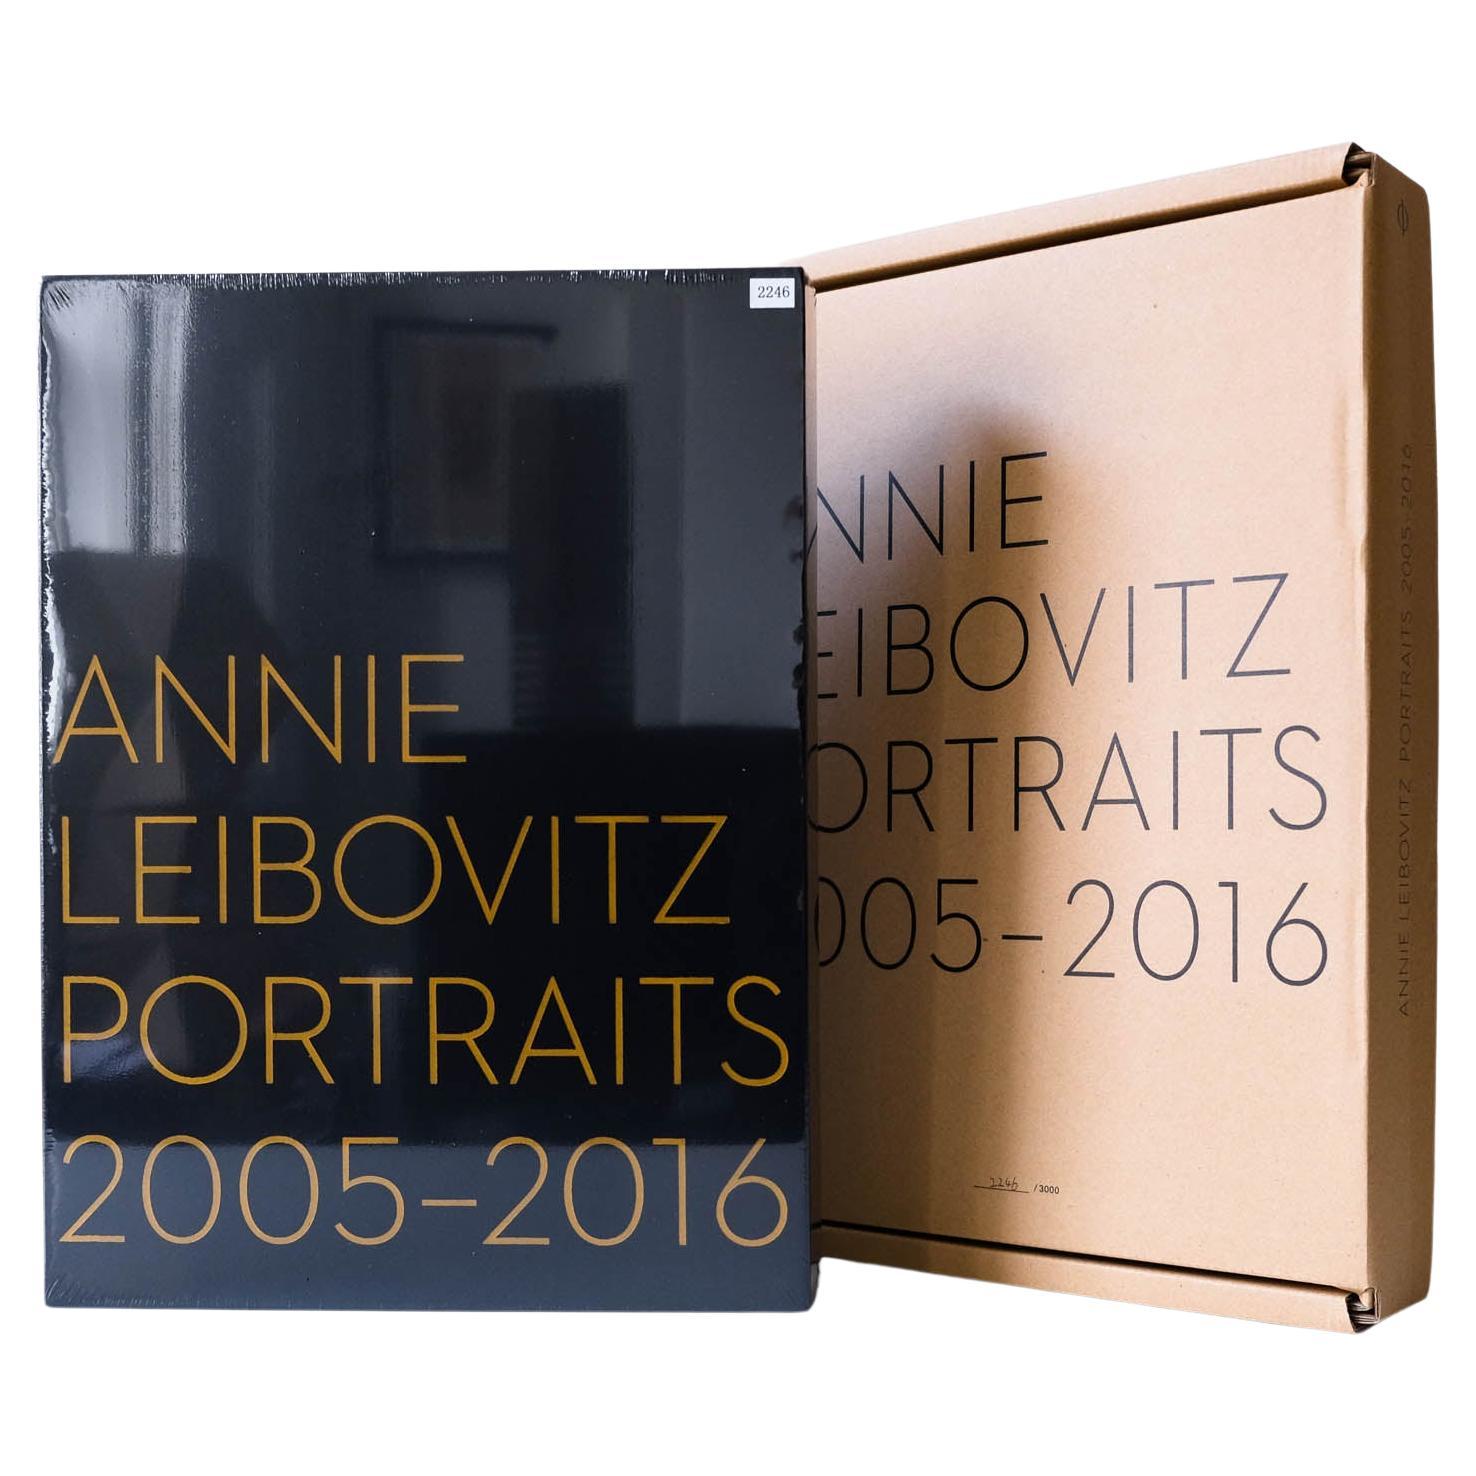 Rare Limited Edition Signed Annie Leibovitz, Portraits 2005-2016 Book, Phaidon 2